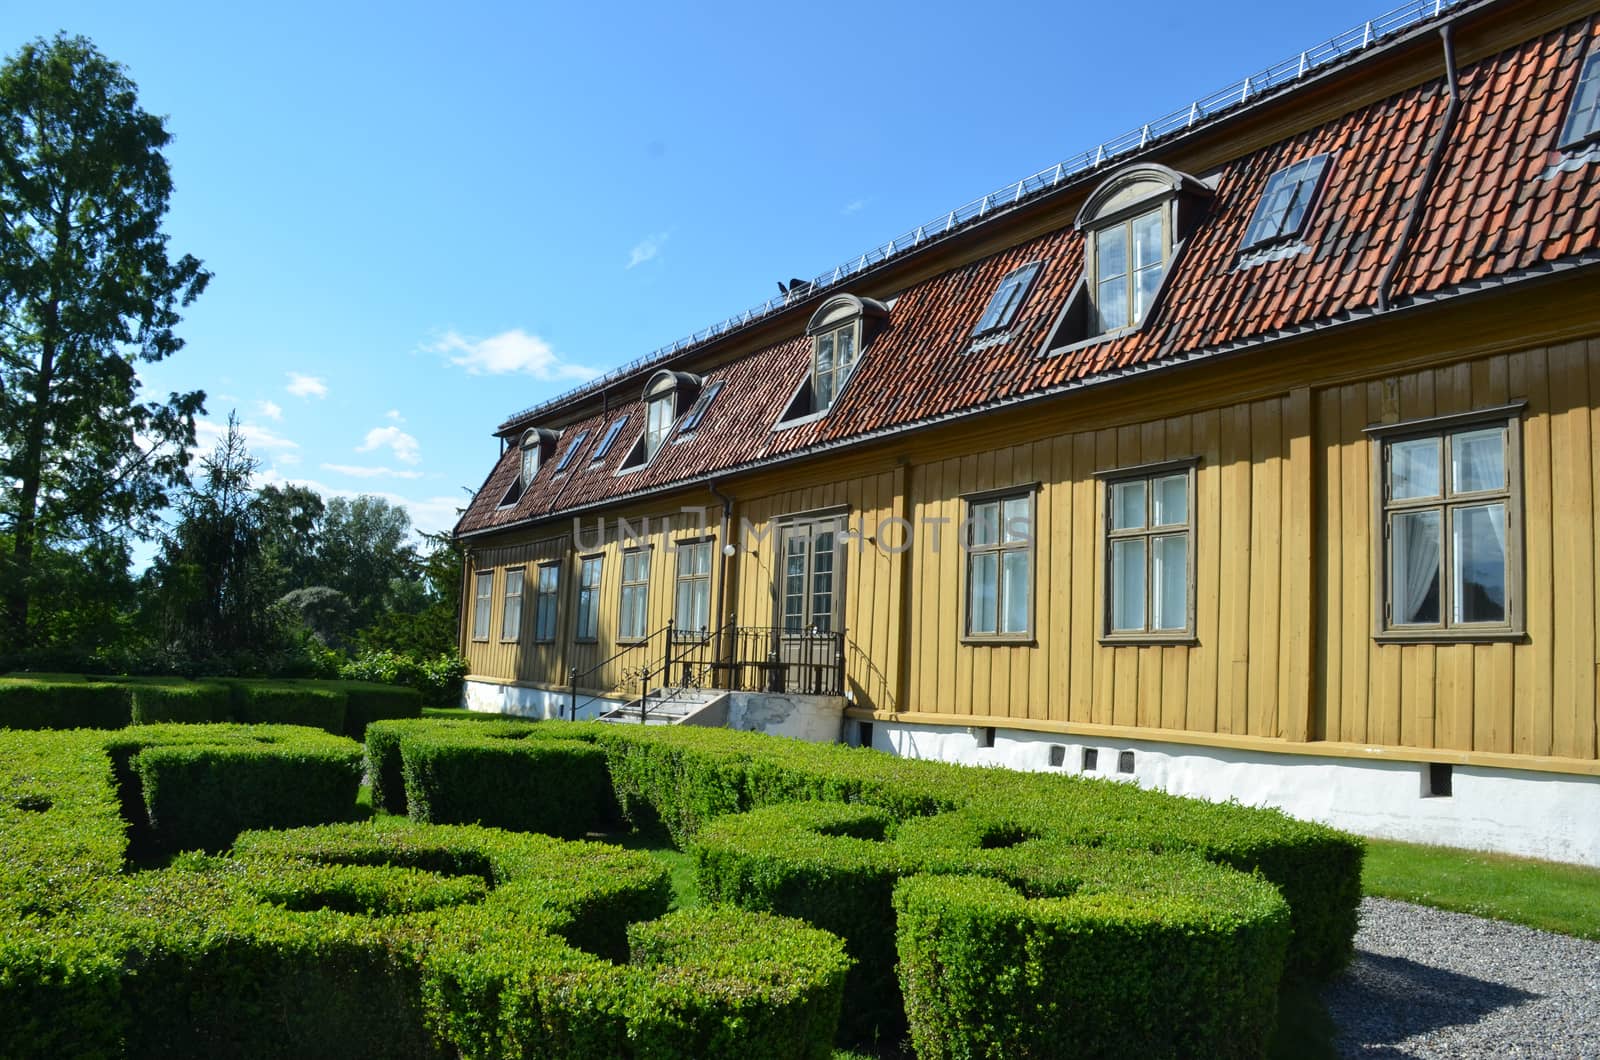 Tøyen Manor in Oslo Botanical Garden by Brage